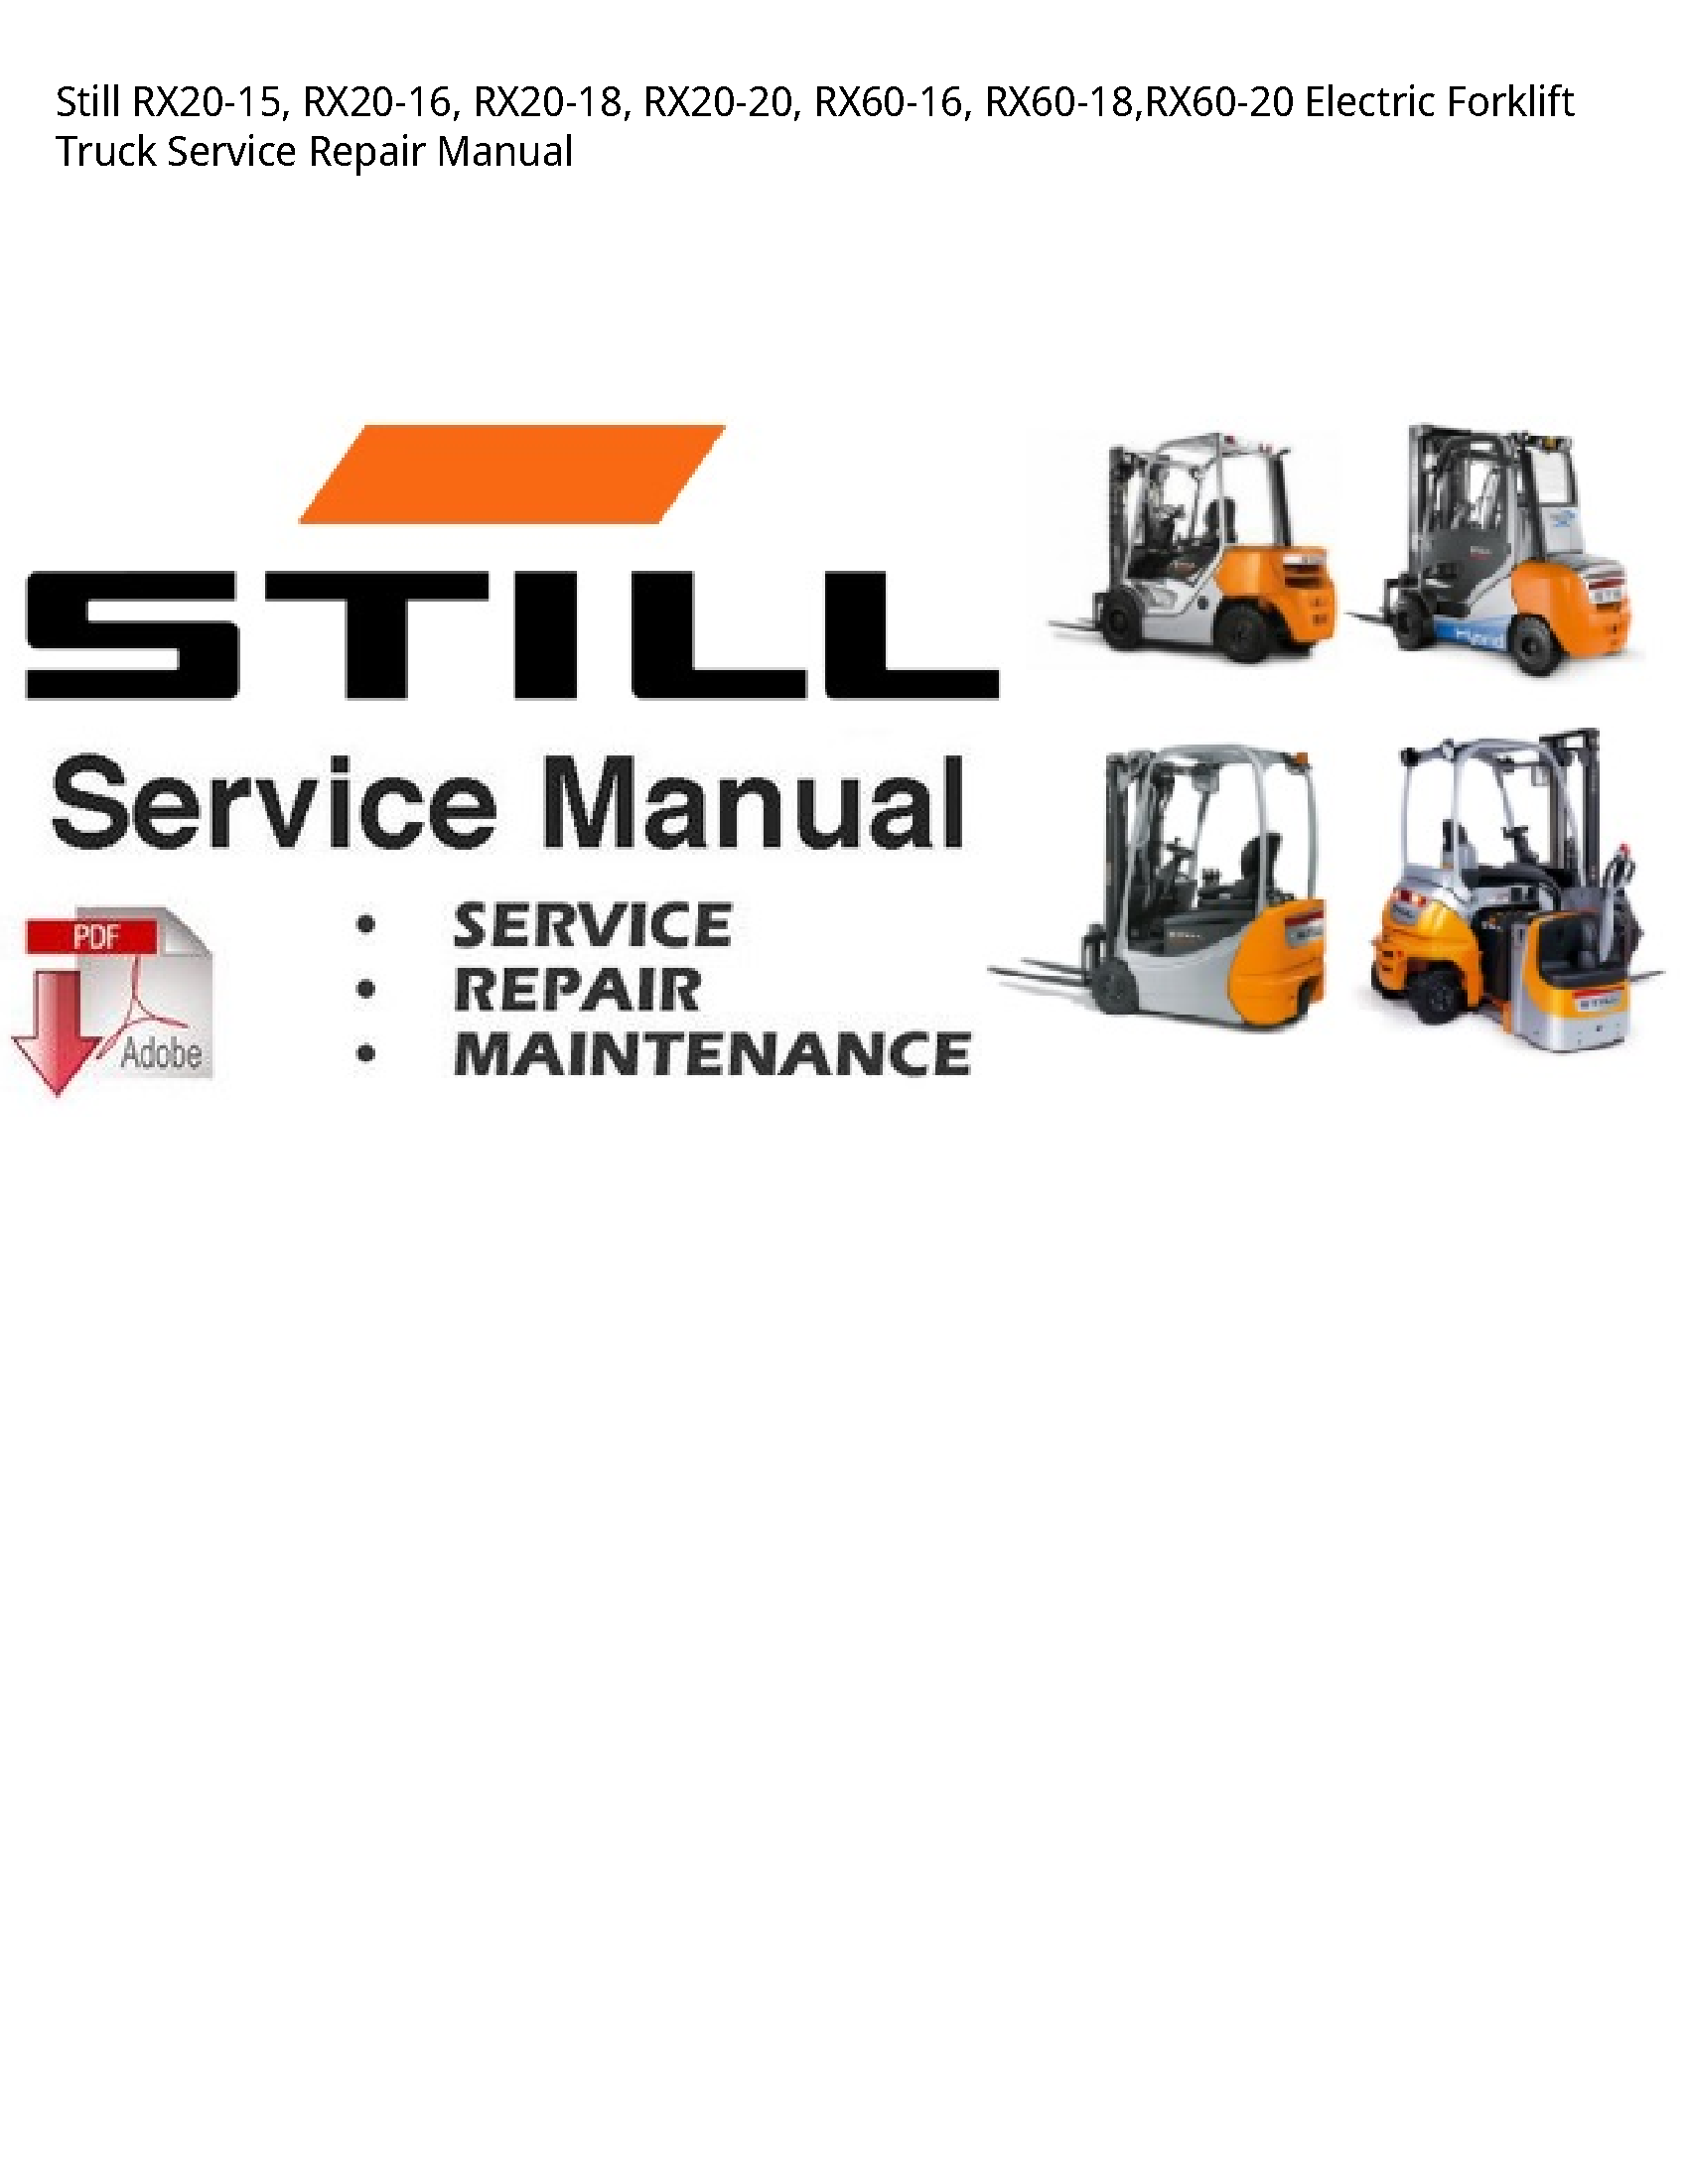 Still RX20-15 Electric Forklift Truck manual